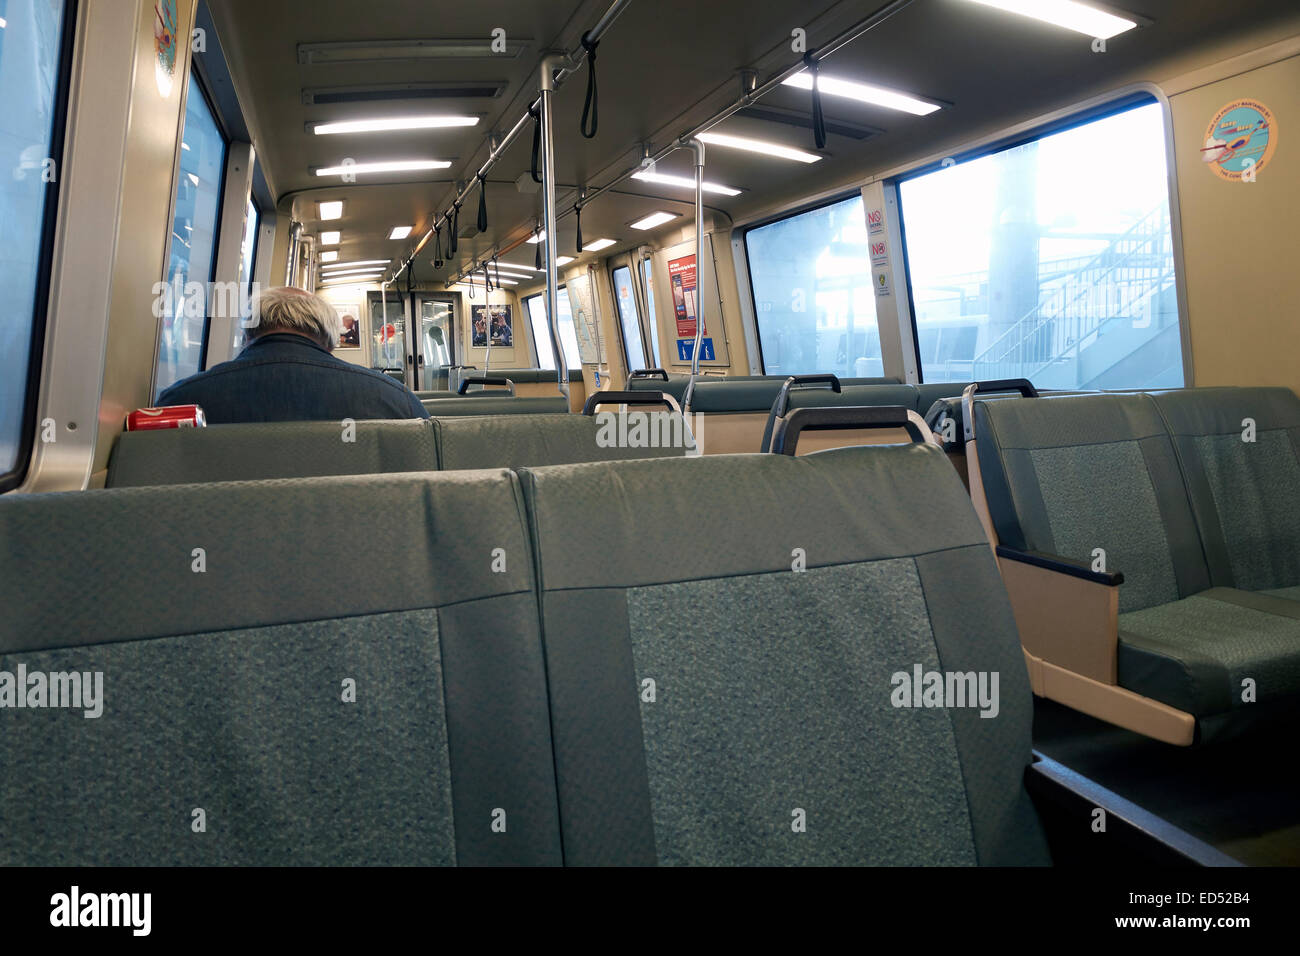 Inside a Bay Area Rapid Transit (BART) train, California, USA Stock Photo